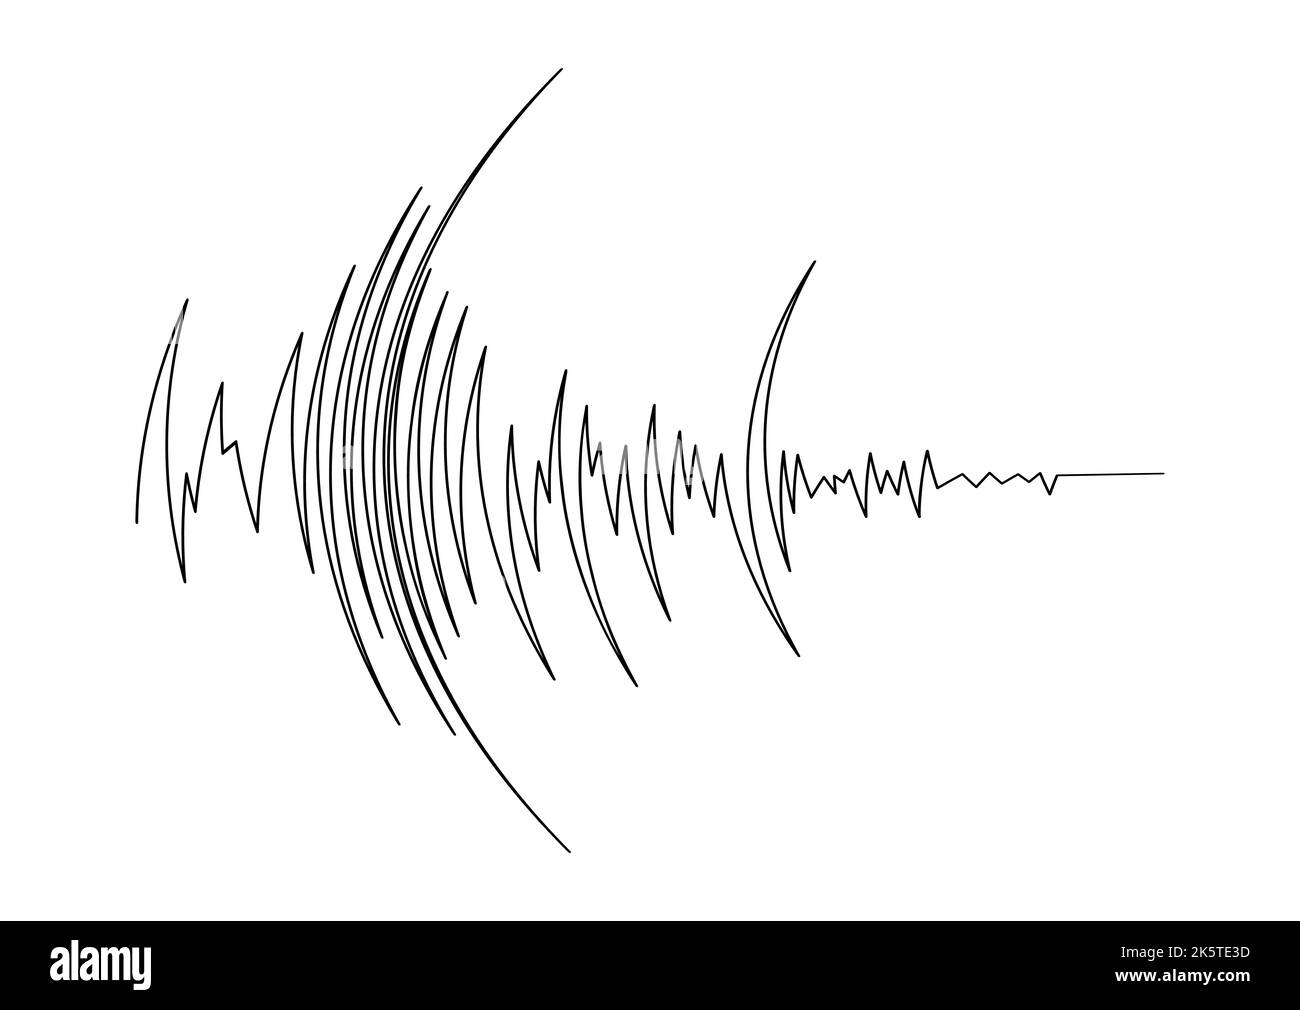 Earthquake seismogram or voice music volume wave vector illustration. Stock Vector